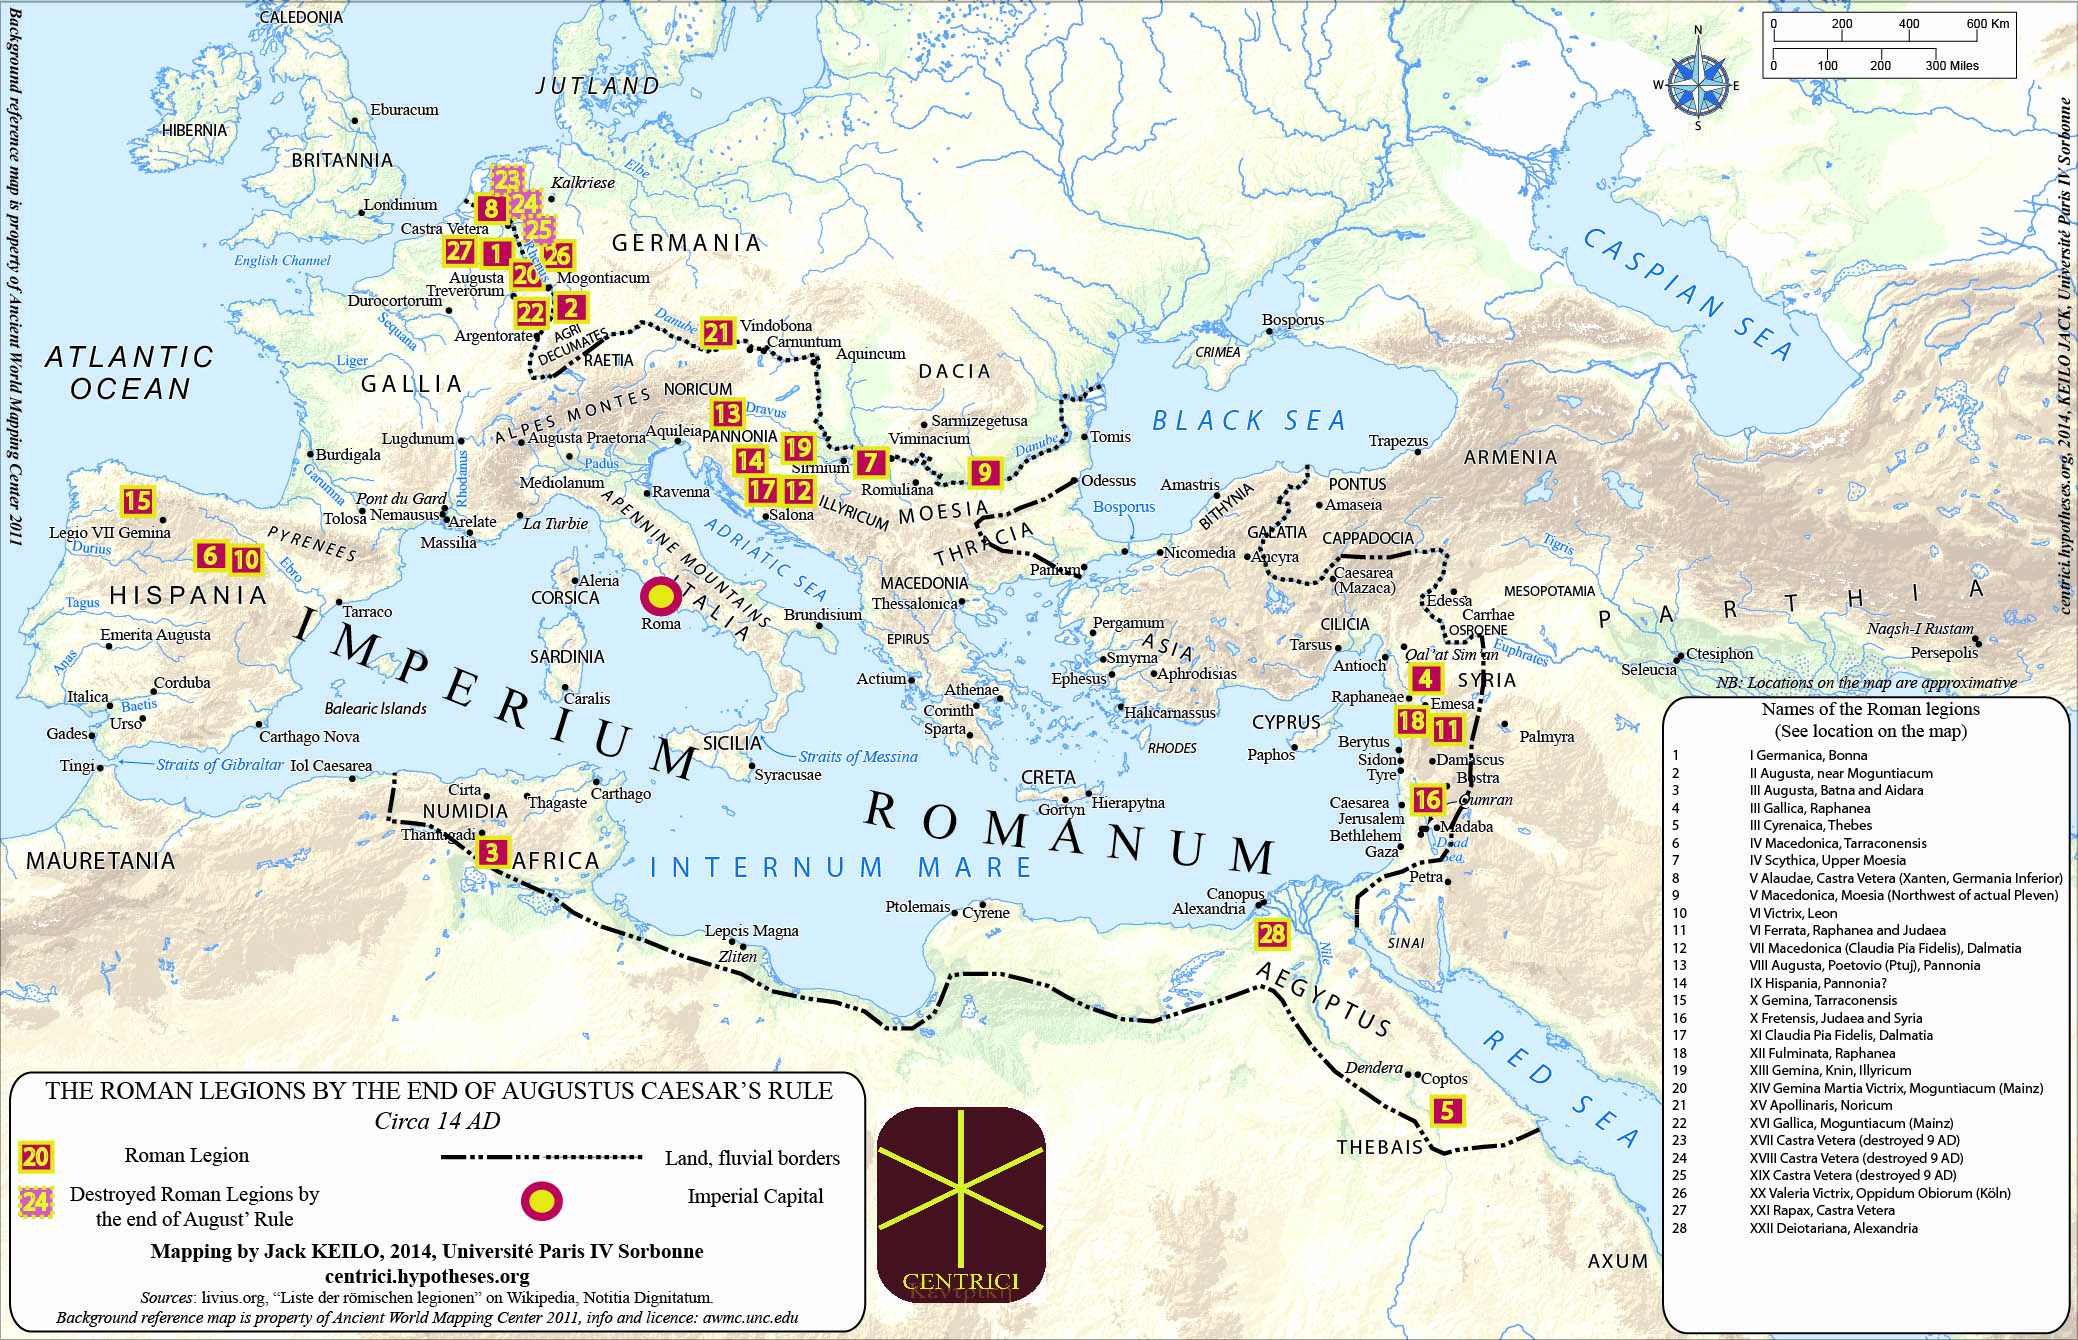 Roman-legions-14-AD-Centrici-site-Keilo-Jack.jpg